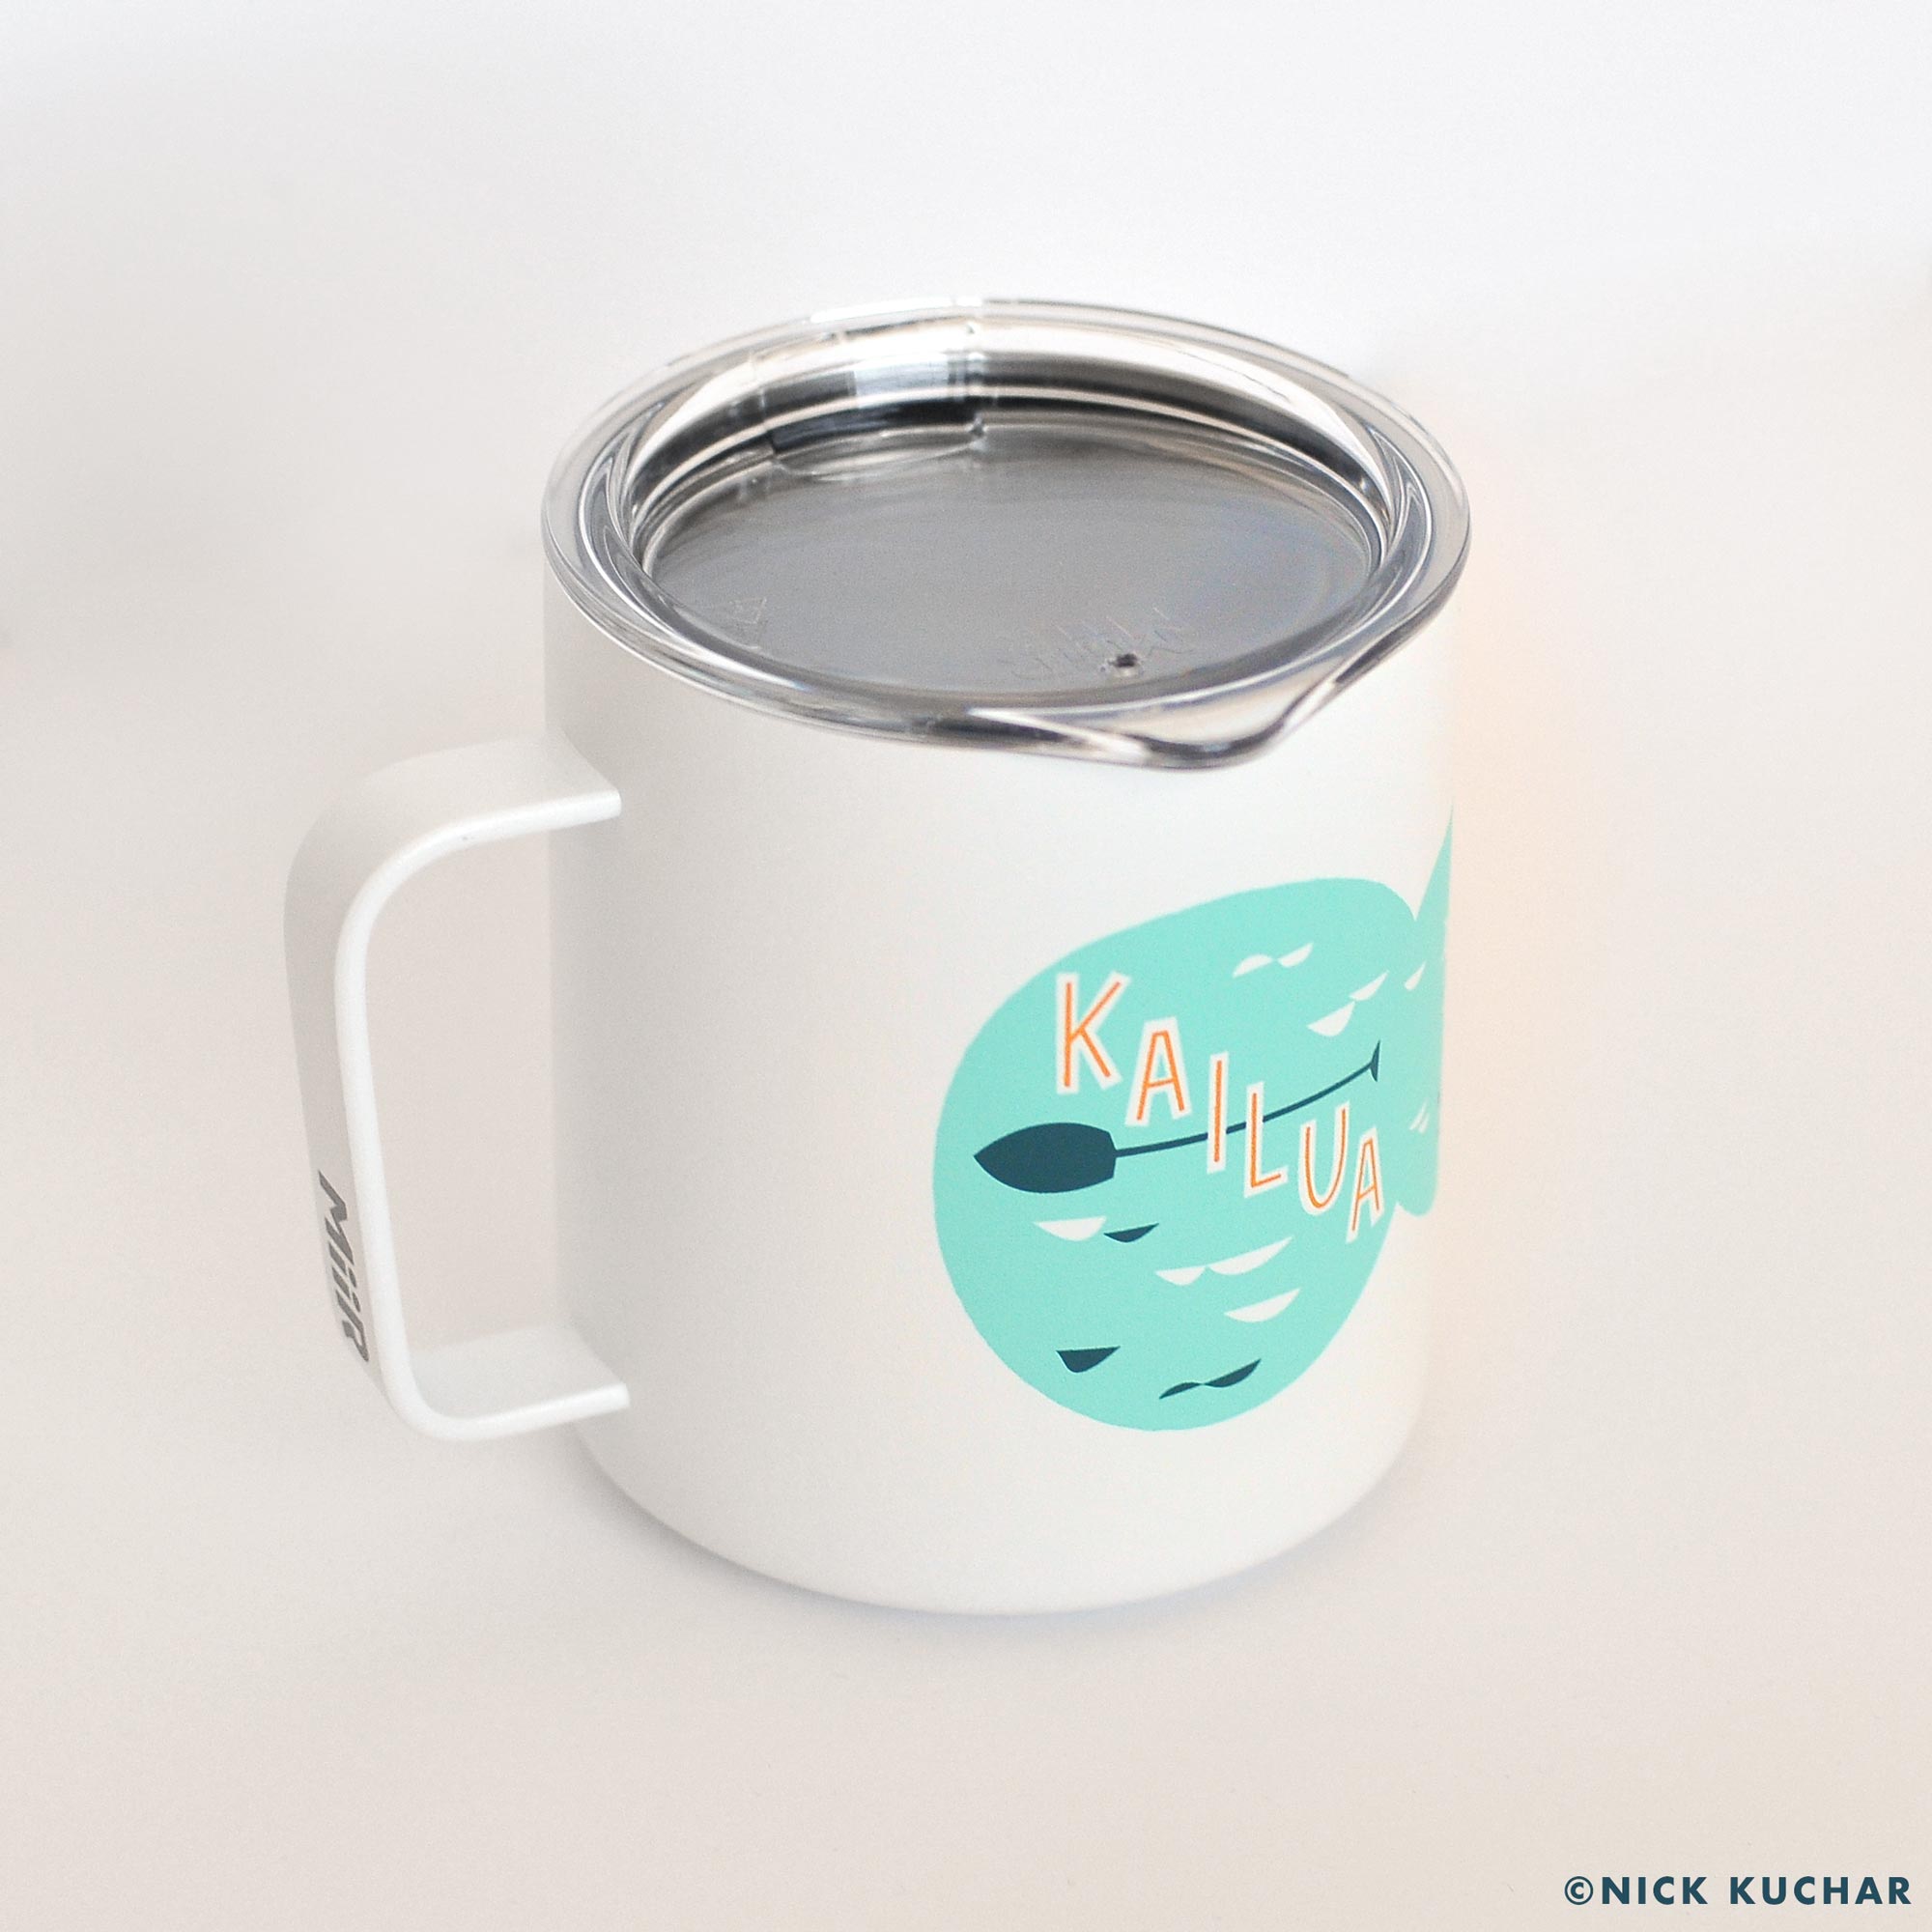 Miir Preserve your Heritage Coffee Camp Mug